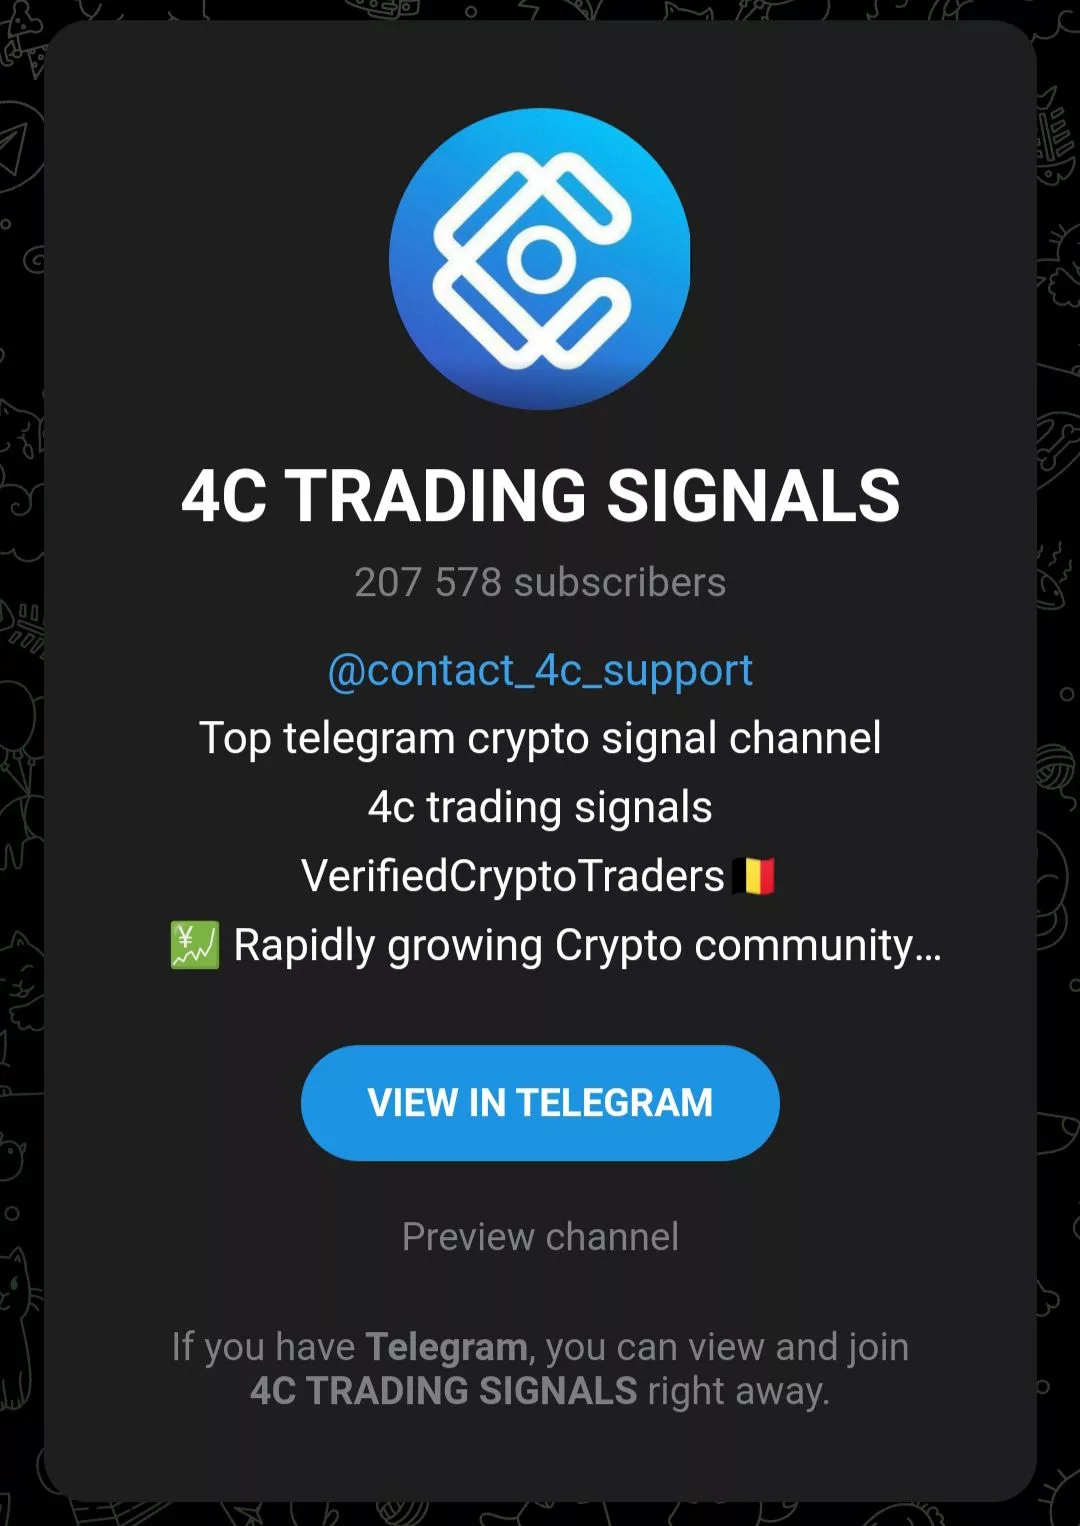 4c Trading Signals Telegram Channel

